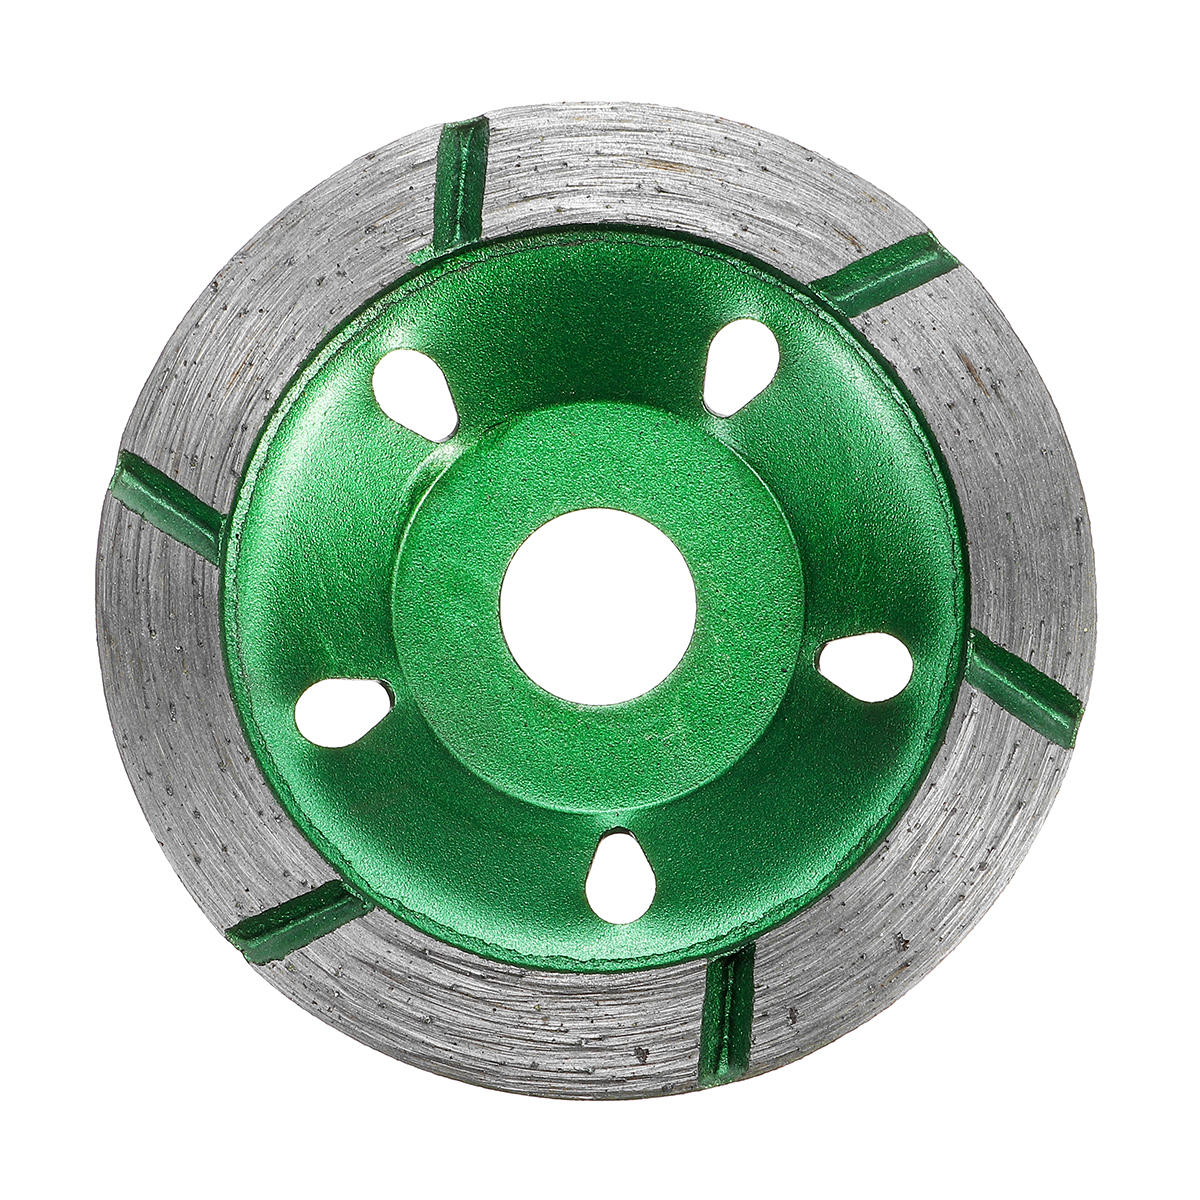 5" Diamond Segment Grinding Wheel Cup Disc Grinder for Concrete Granite Stone